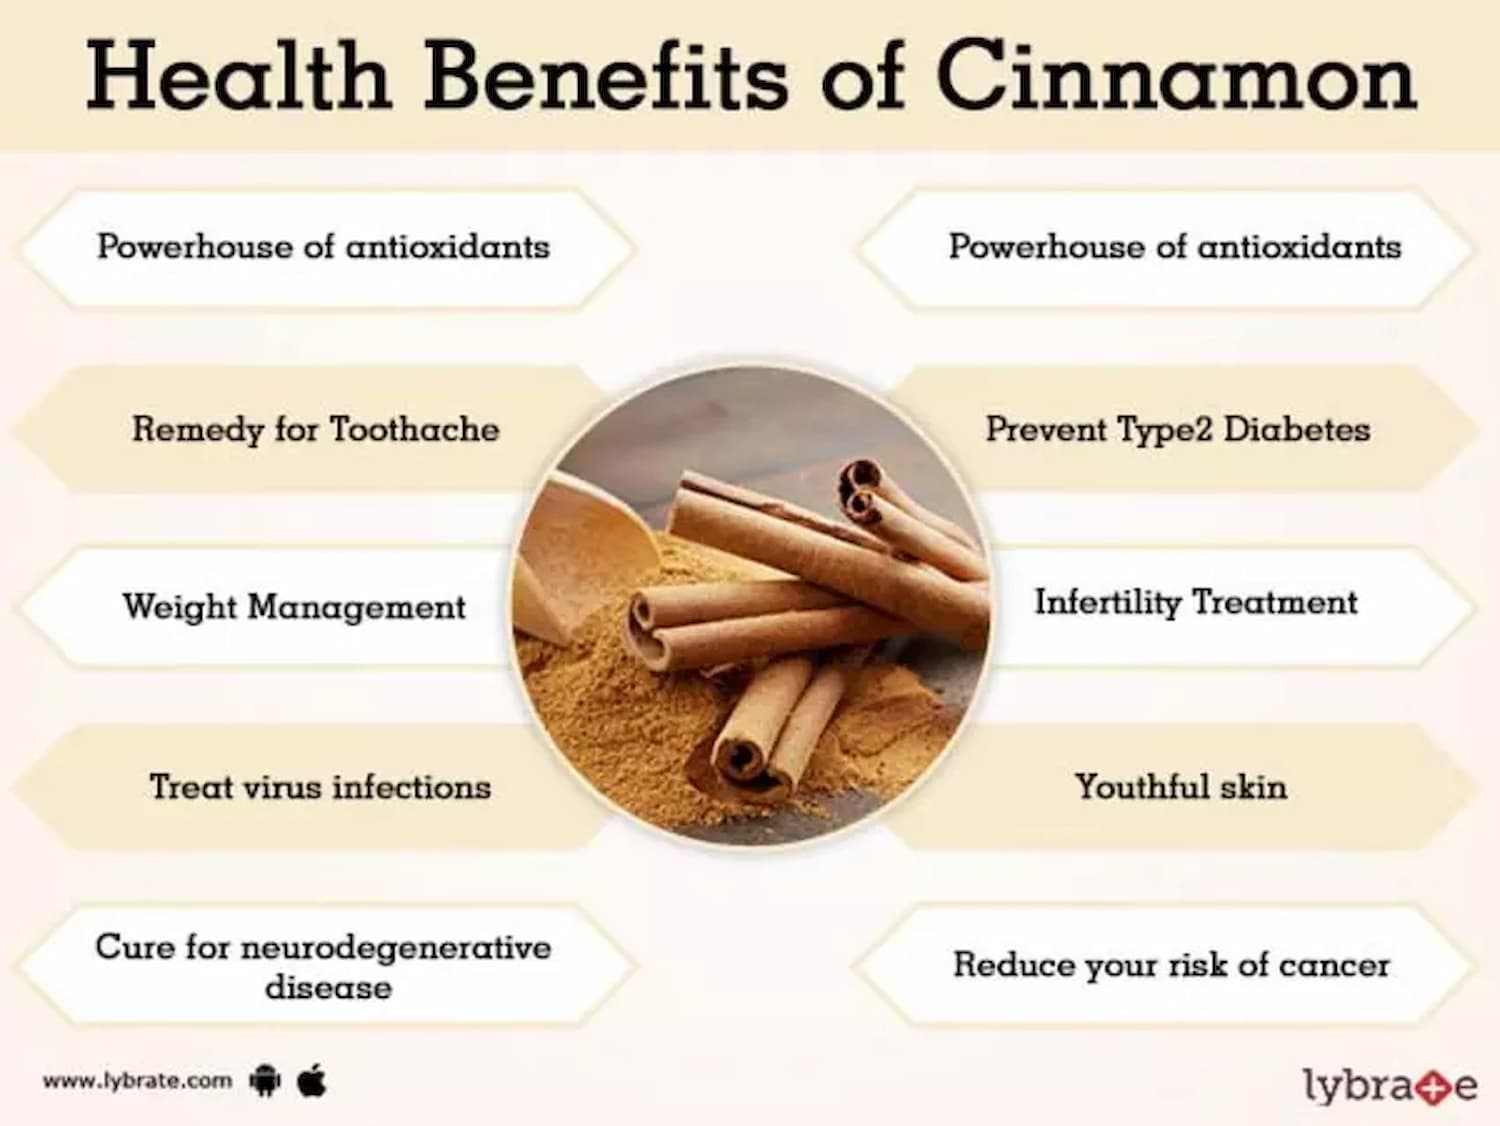 The health benefits of cinnamon